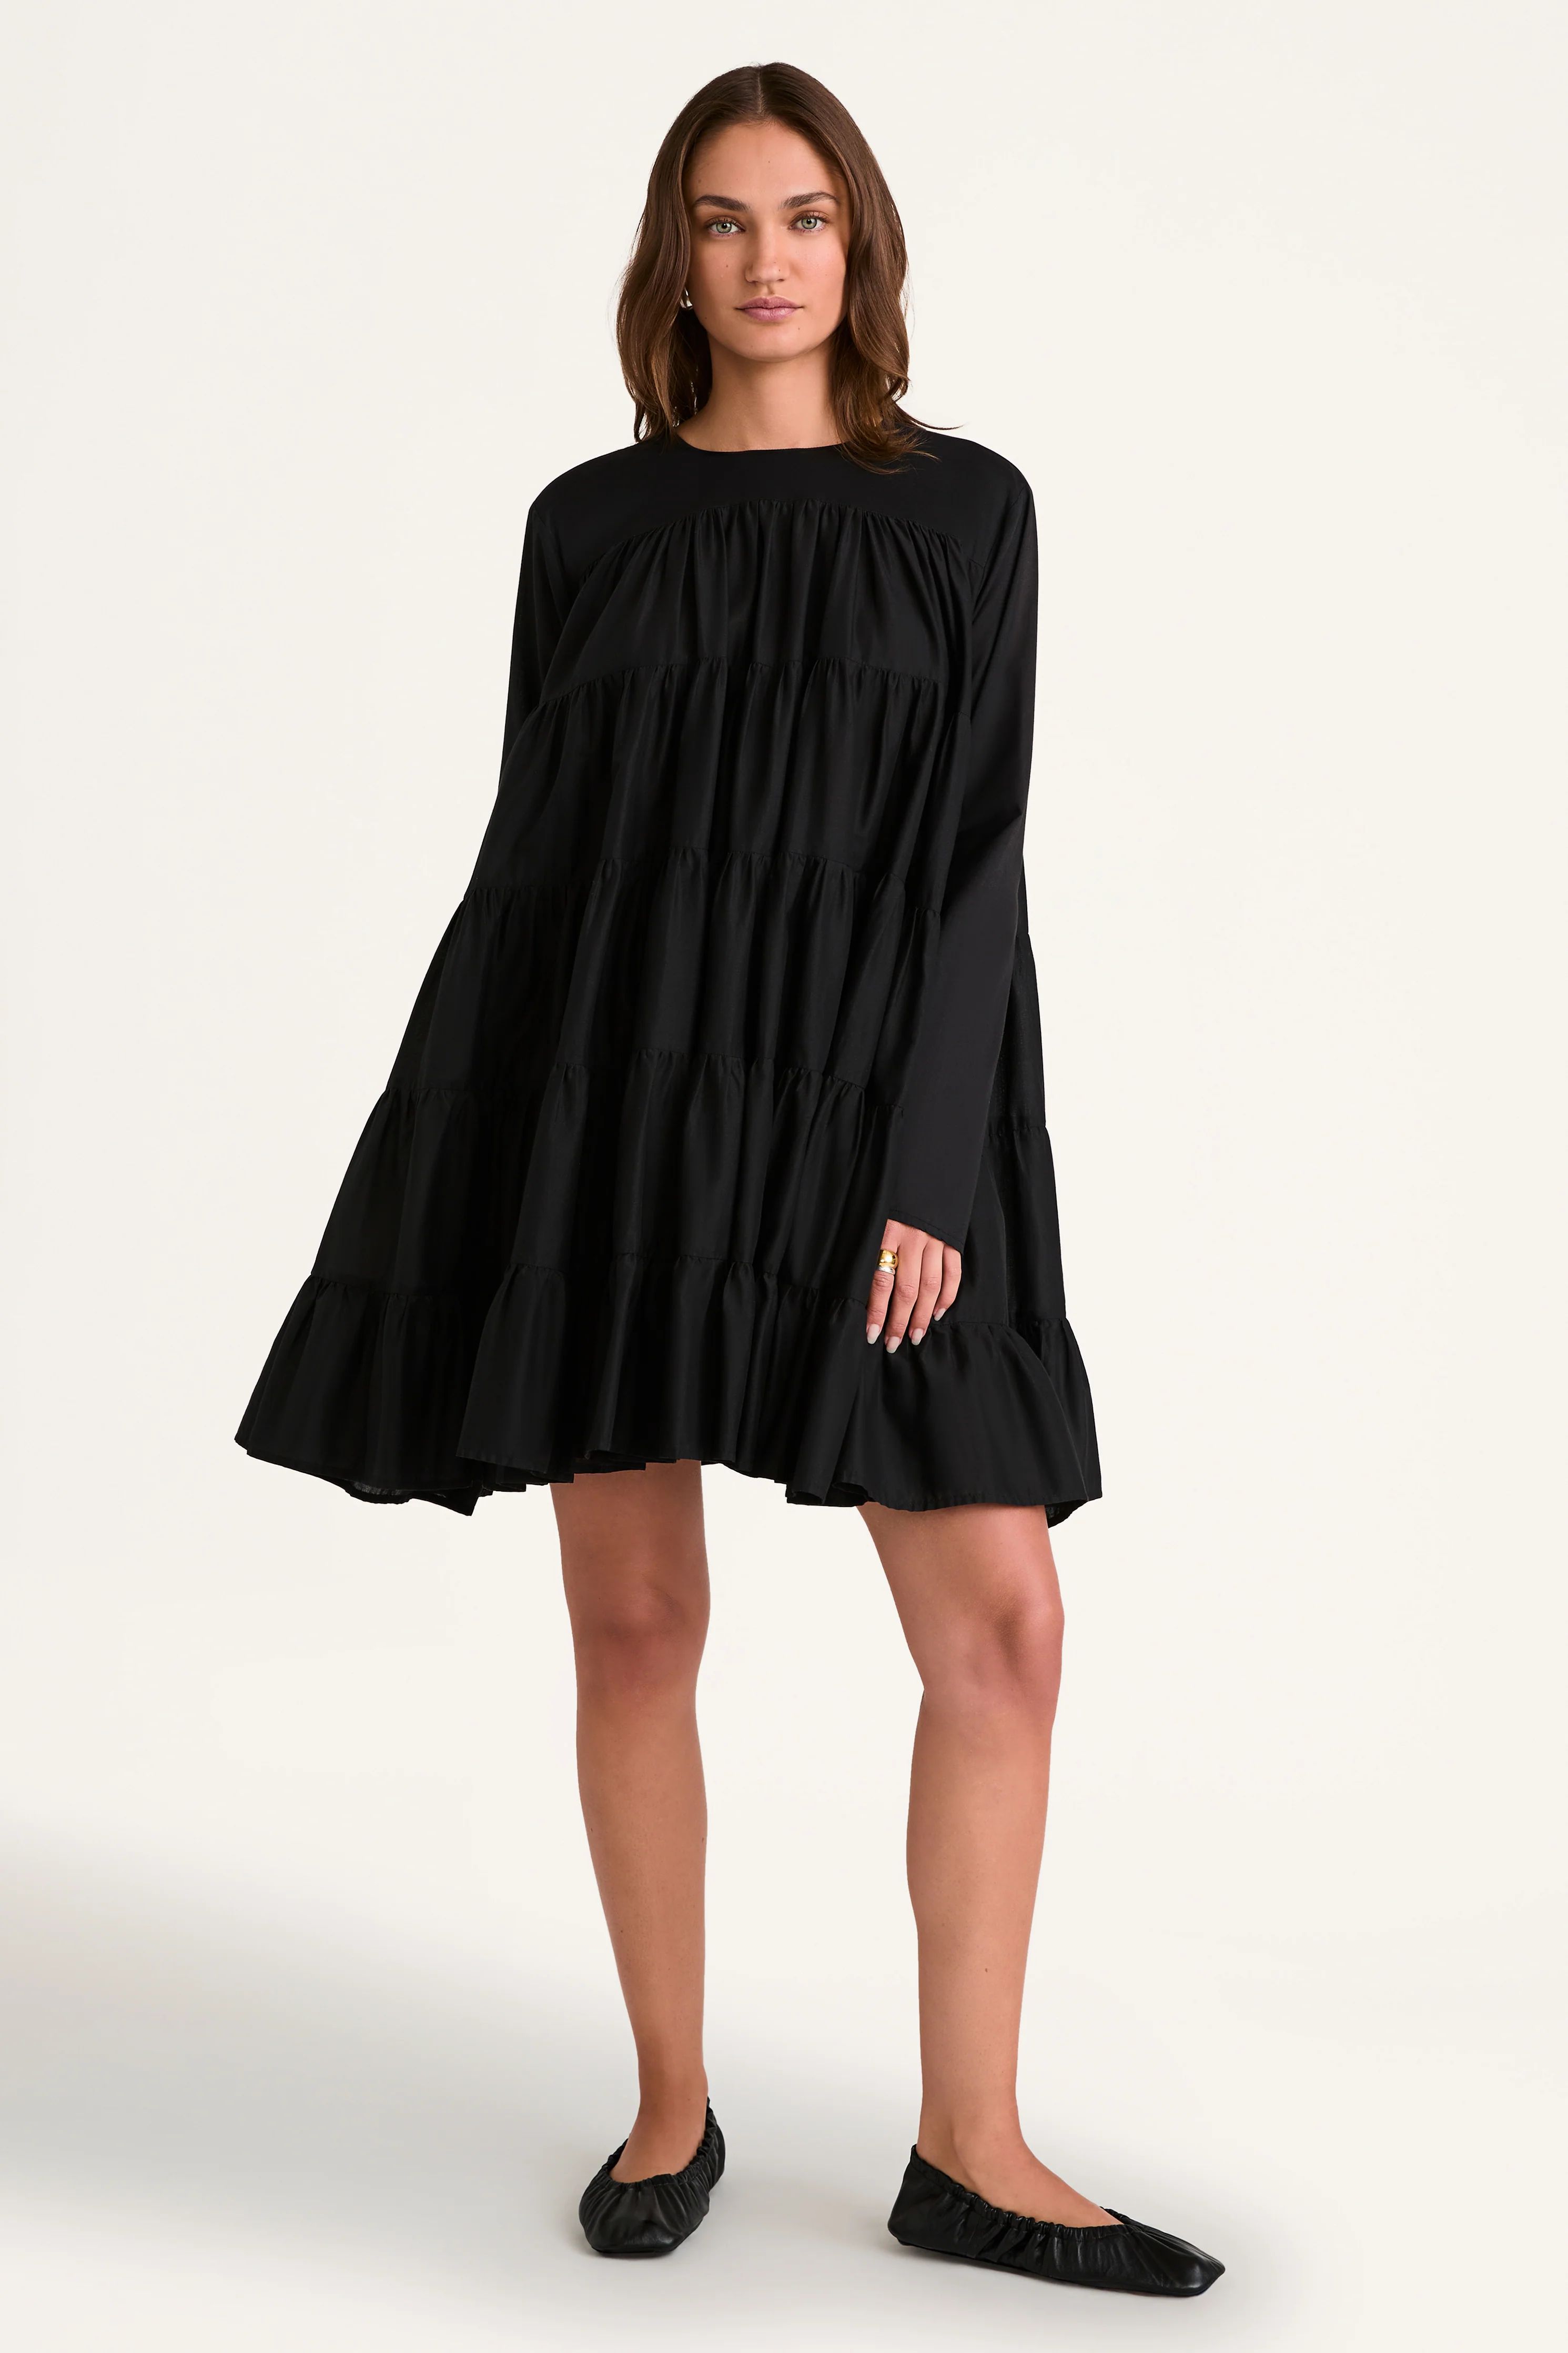 Merlette Soliman Tiered Dress in Black | Merlette NYC